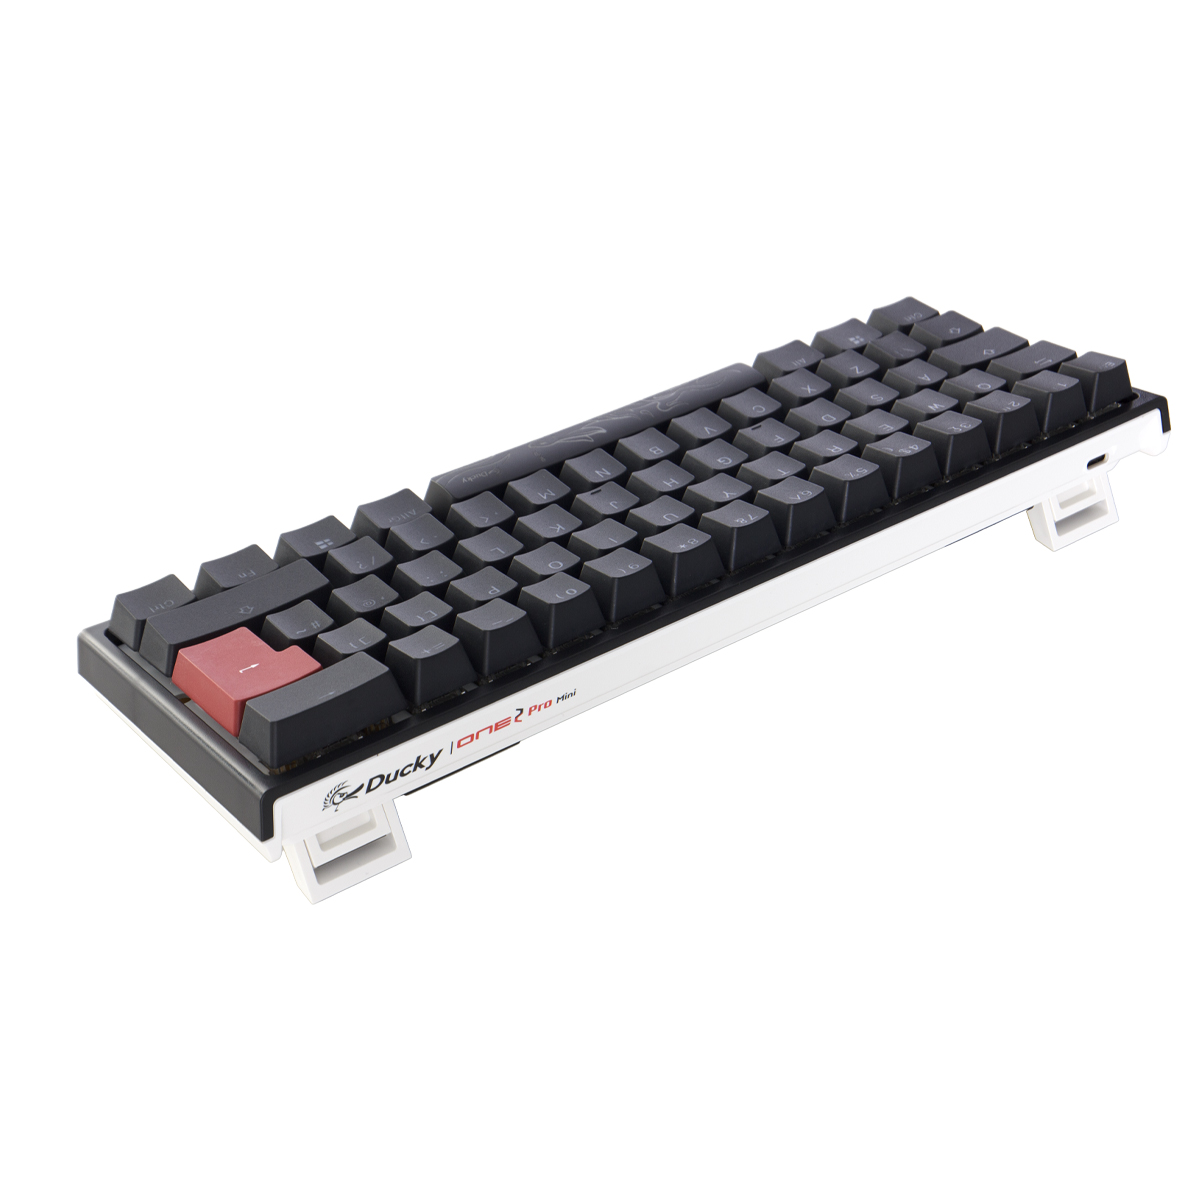 Ducky - Ducky One 2 Pro Mini 60% Mechanical Gaming Keyboard Black MX Cherry Silver Switch - UK Layout